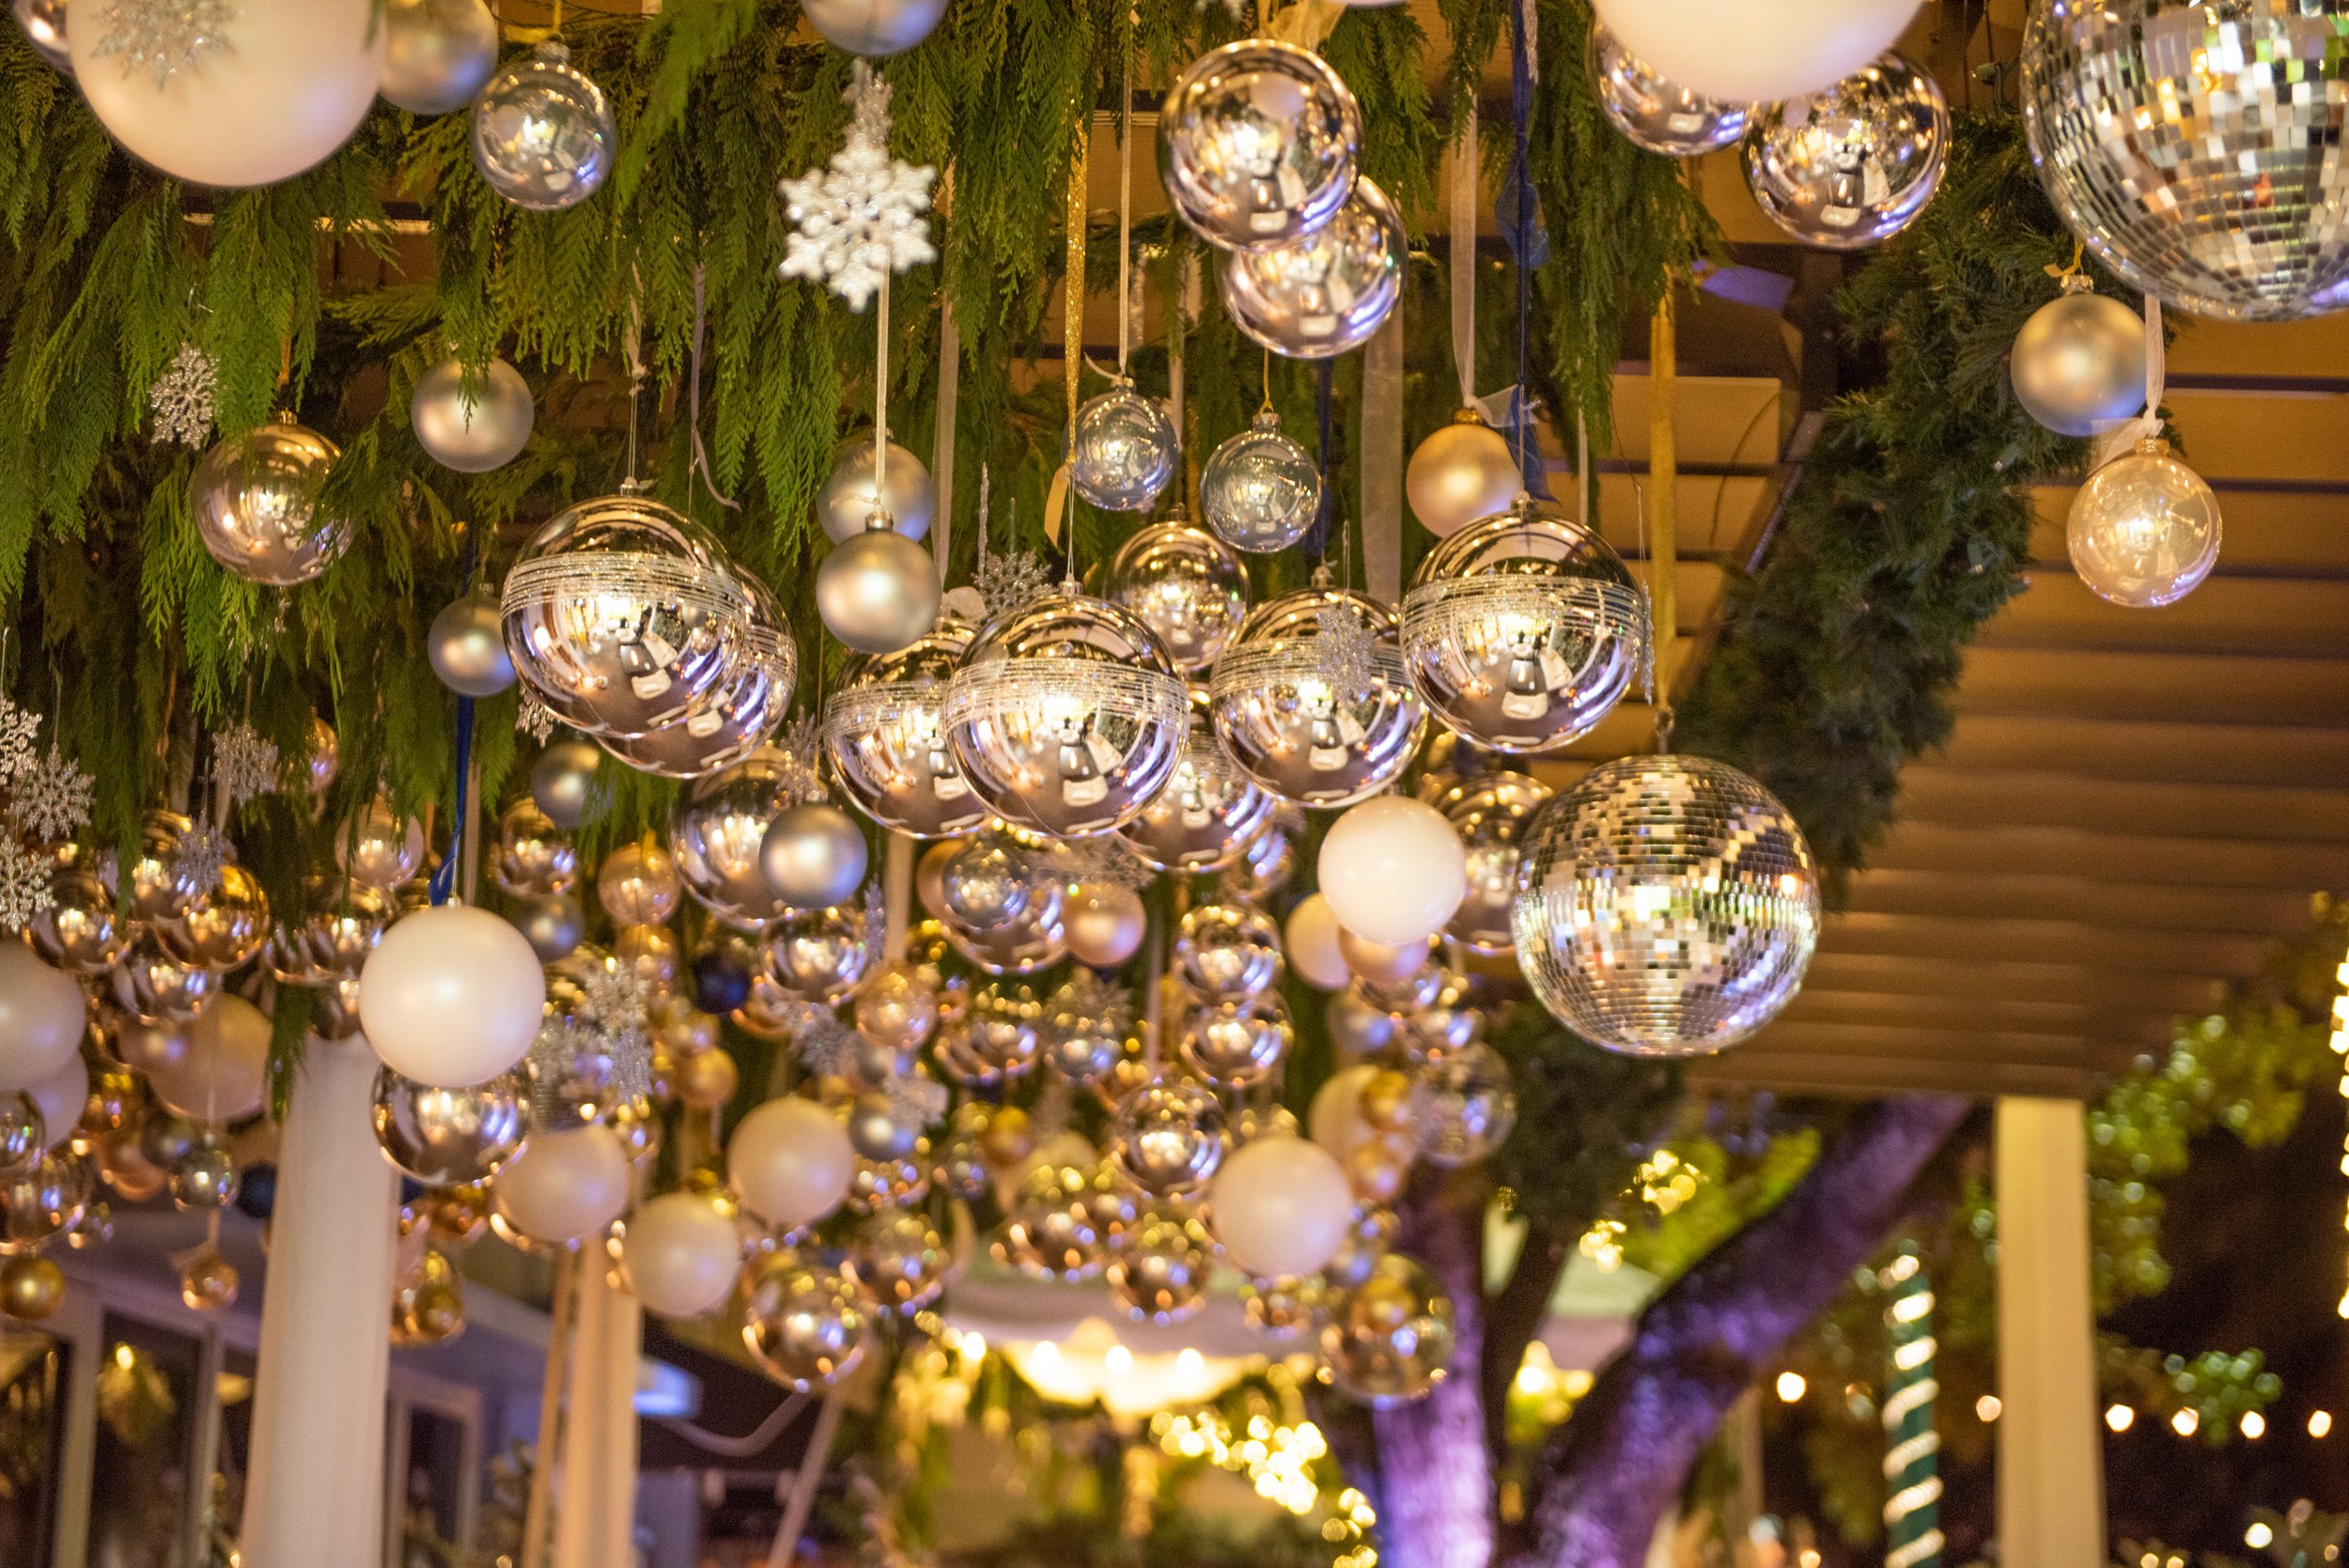 Palm Christmas Tree and Holiday Decor ⋆ Jeweled Interiors